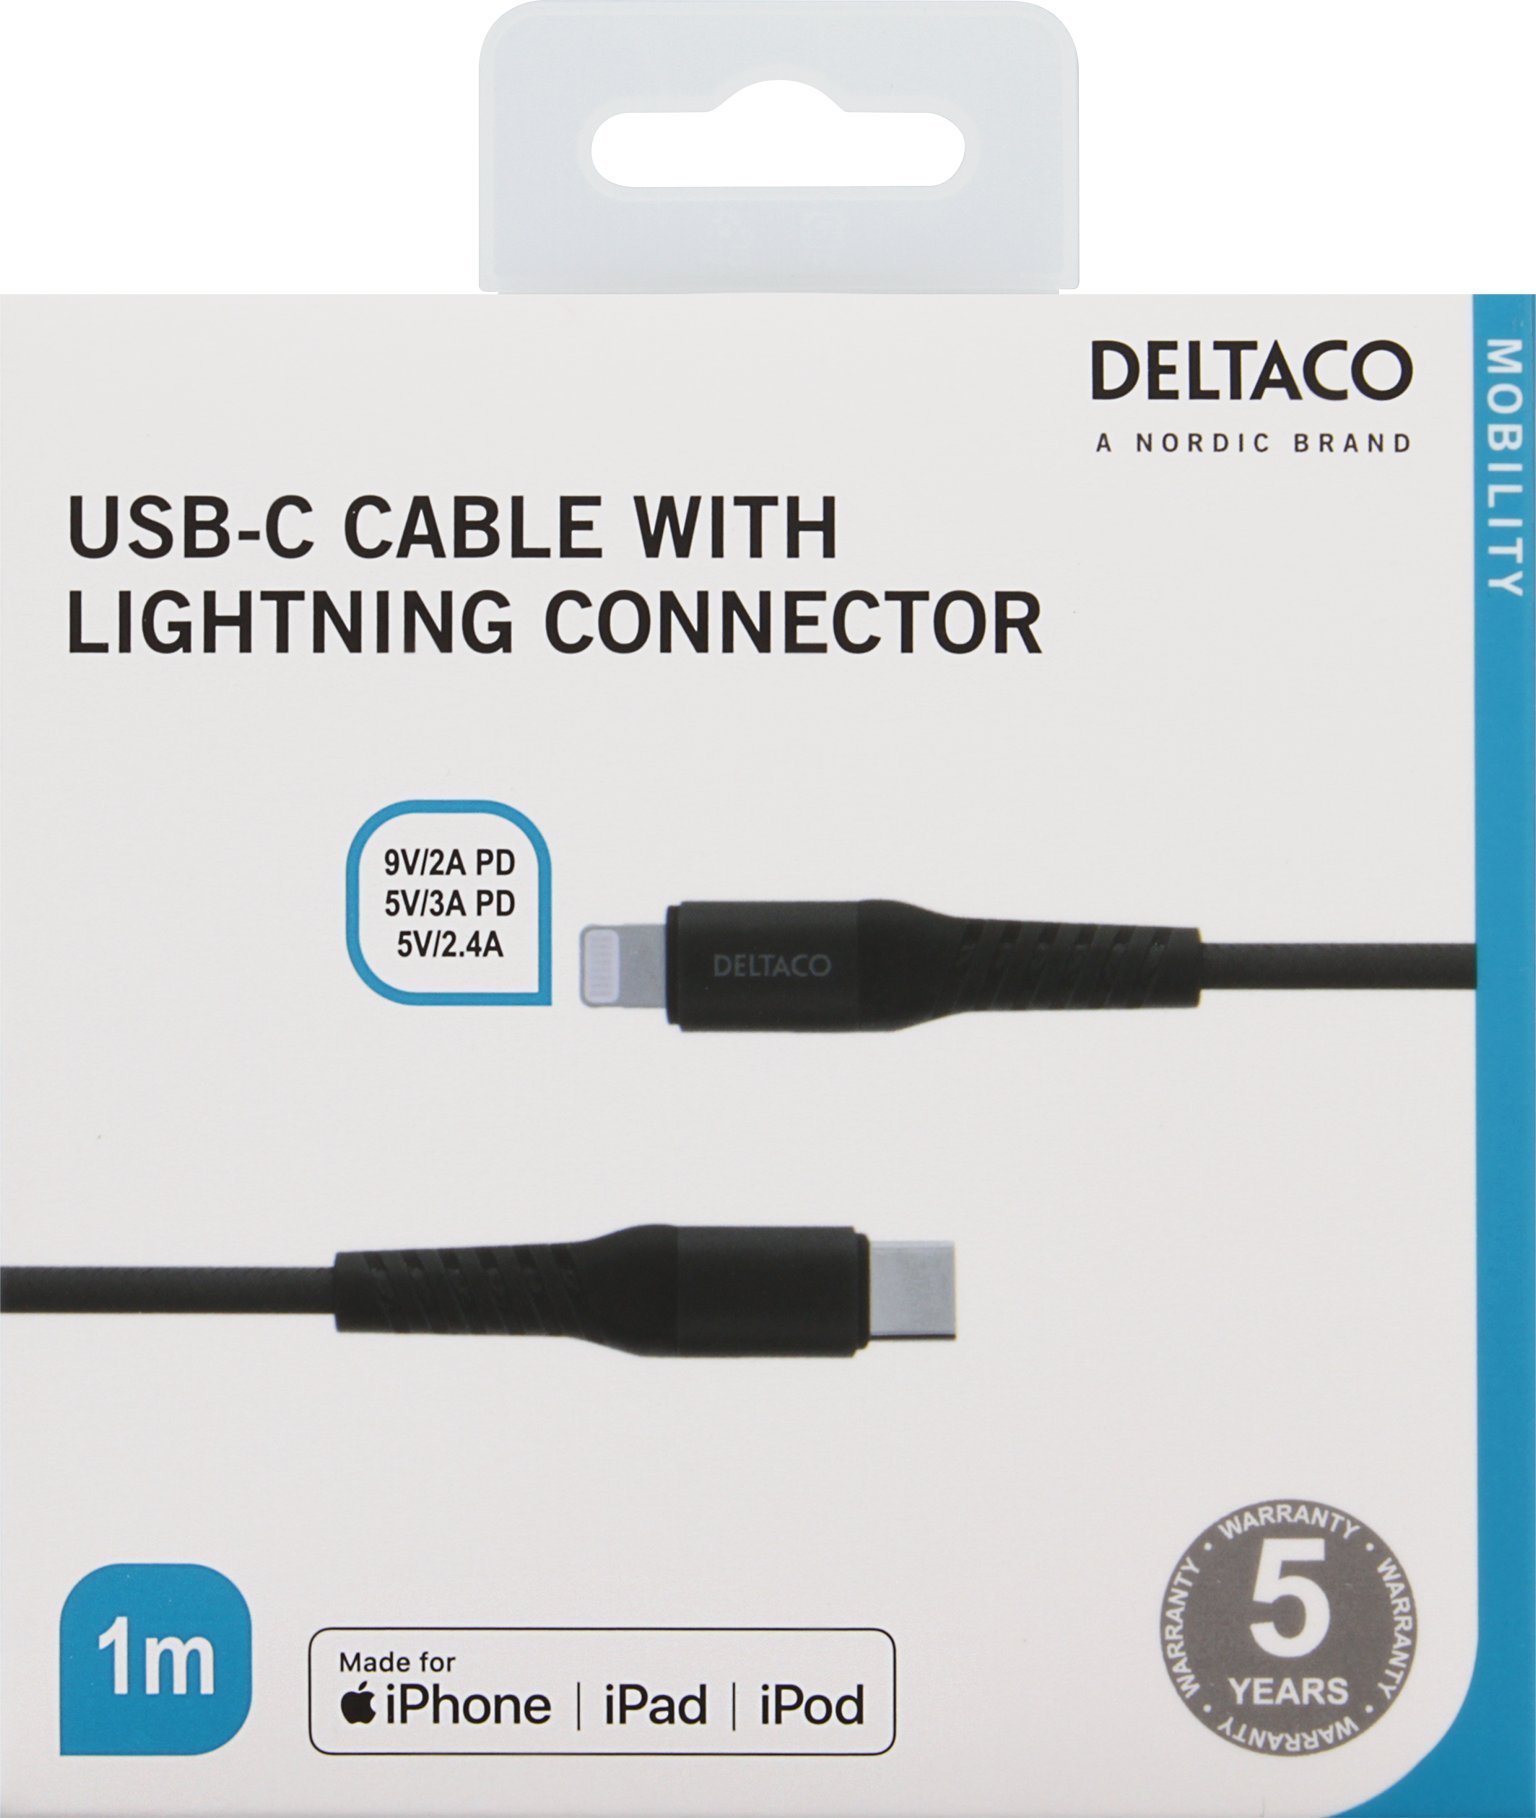 Kabel USB Deltaco DELTACO USB-C to Lightning Cable, 1m, 9V / 2A PD, 5V / 3A PD, 5V / 2.4A,, USB 2.0, Black / IPLH-313M